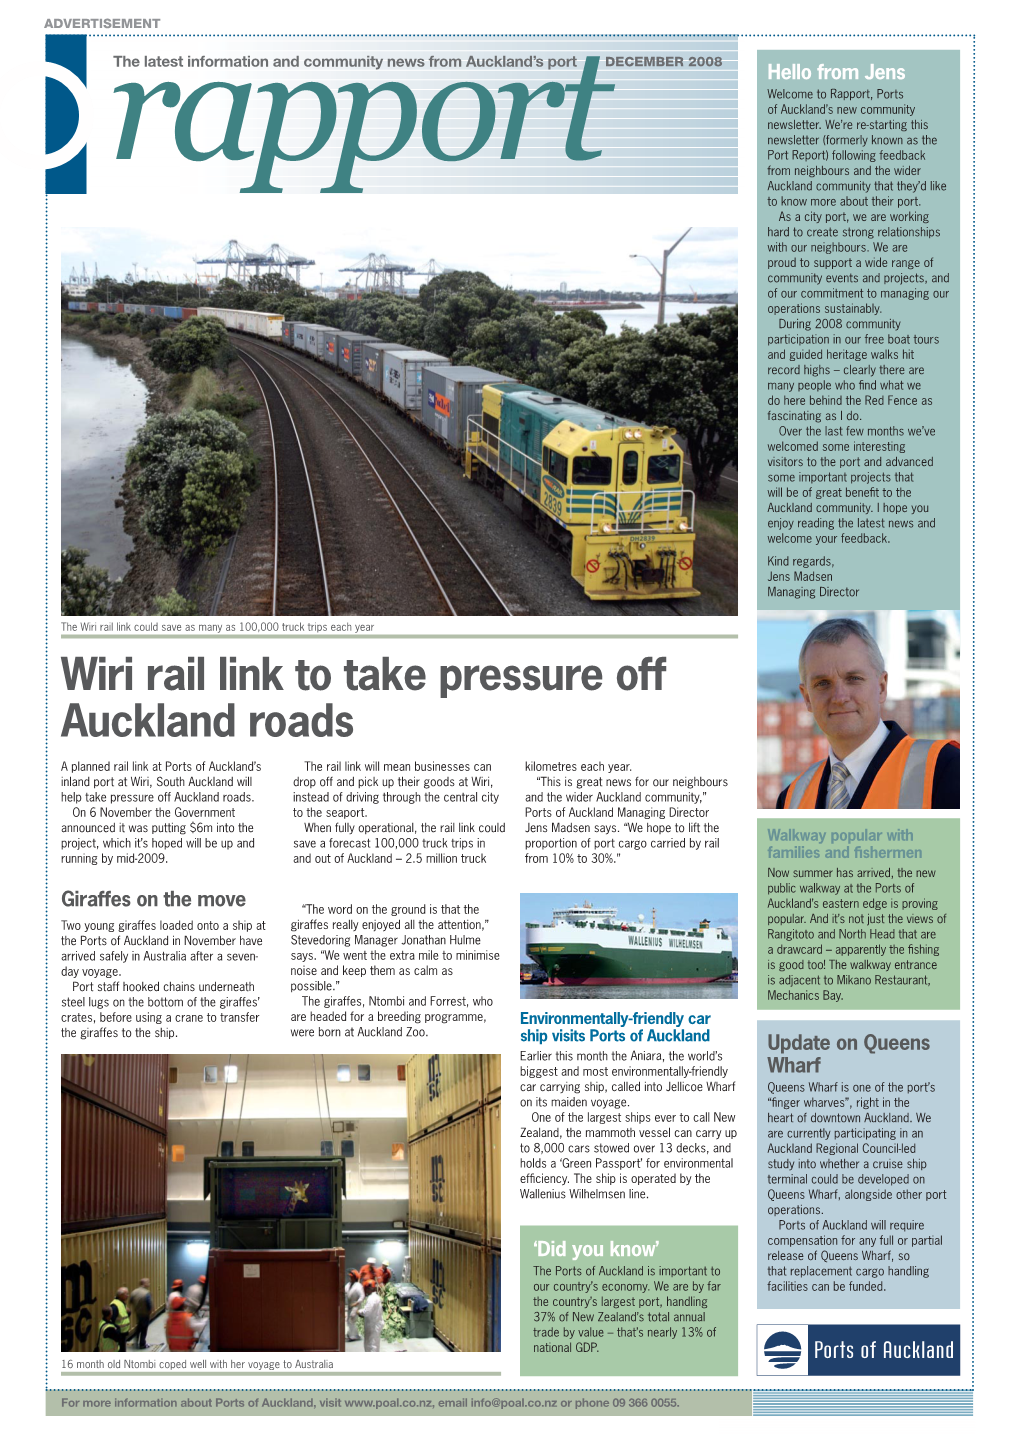 Wiri Rail Link to Take Pressure Off Auckland Roads